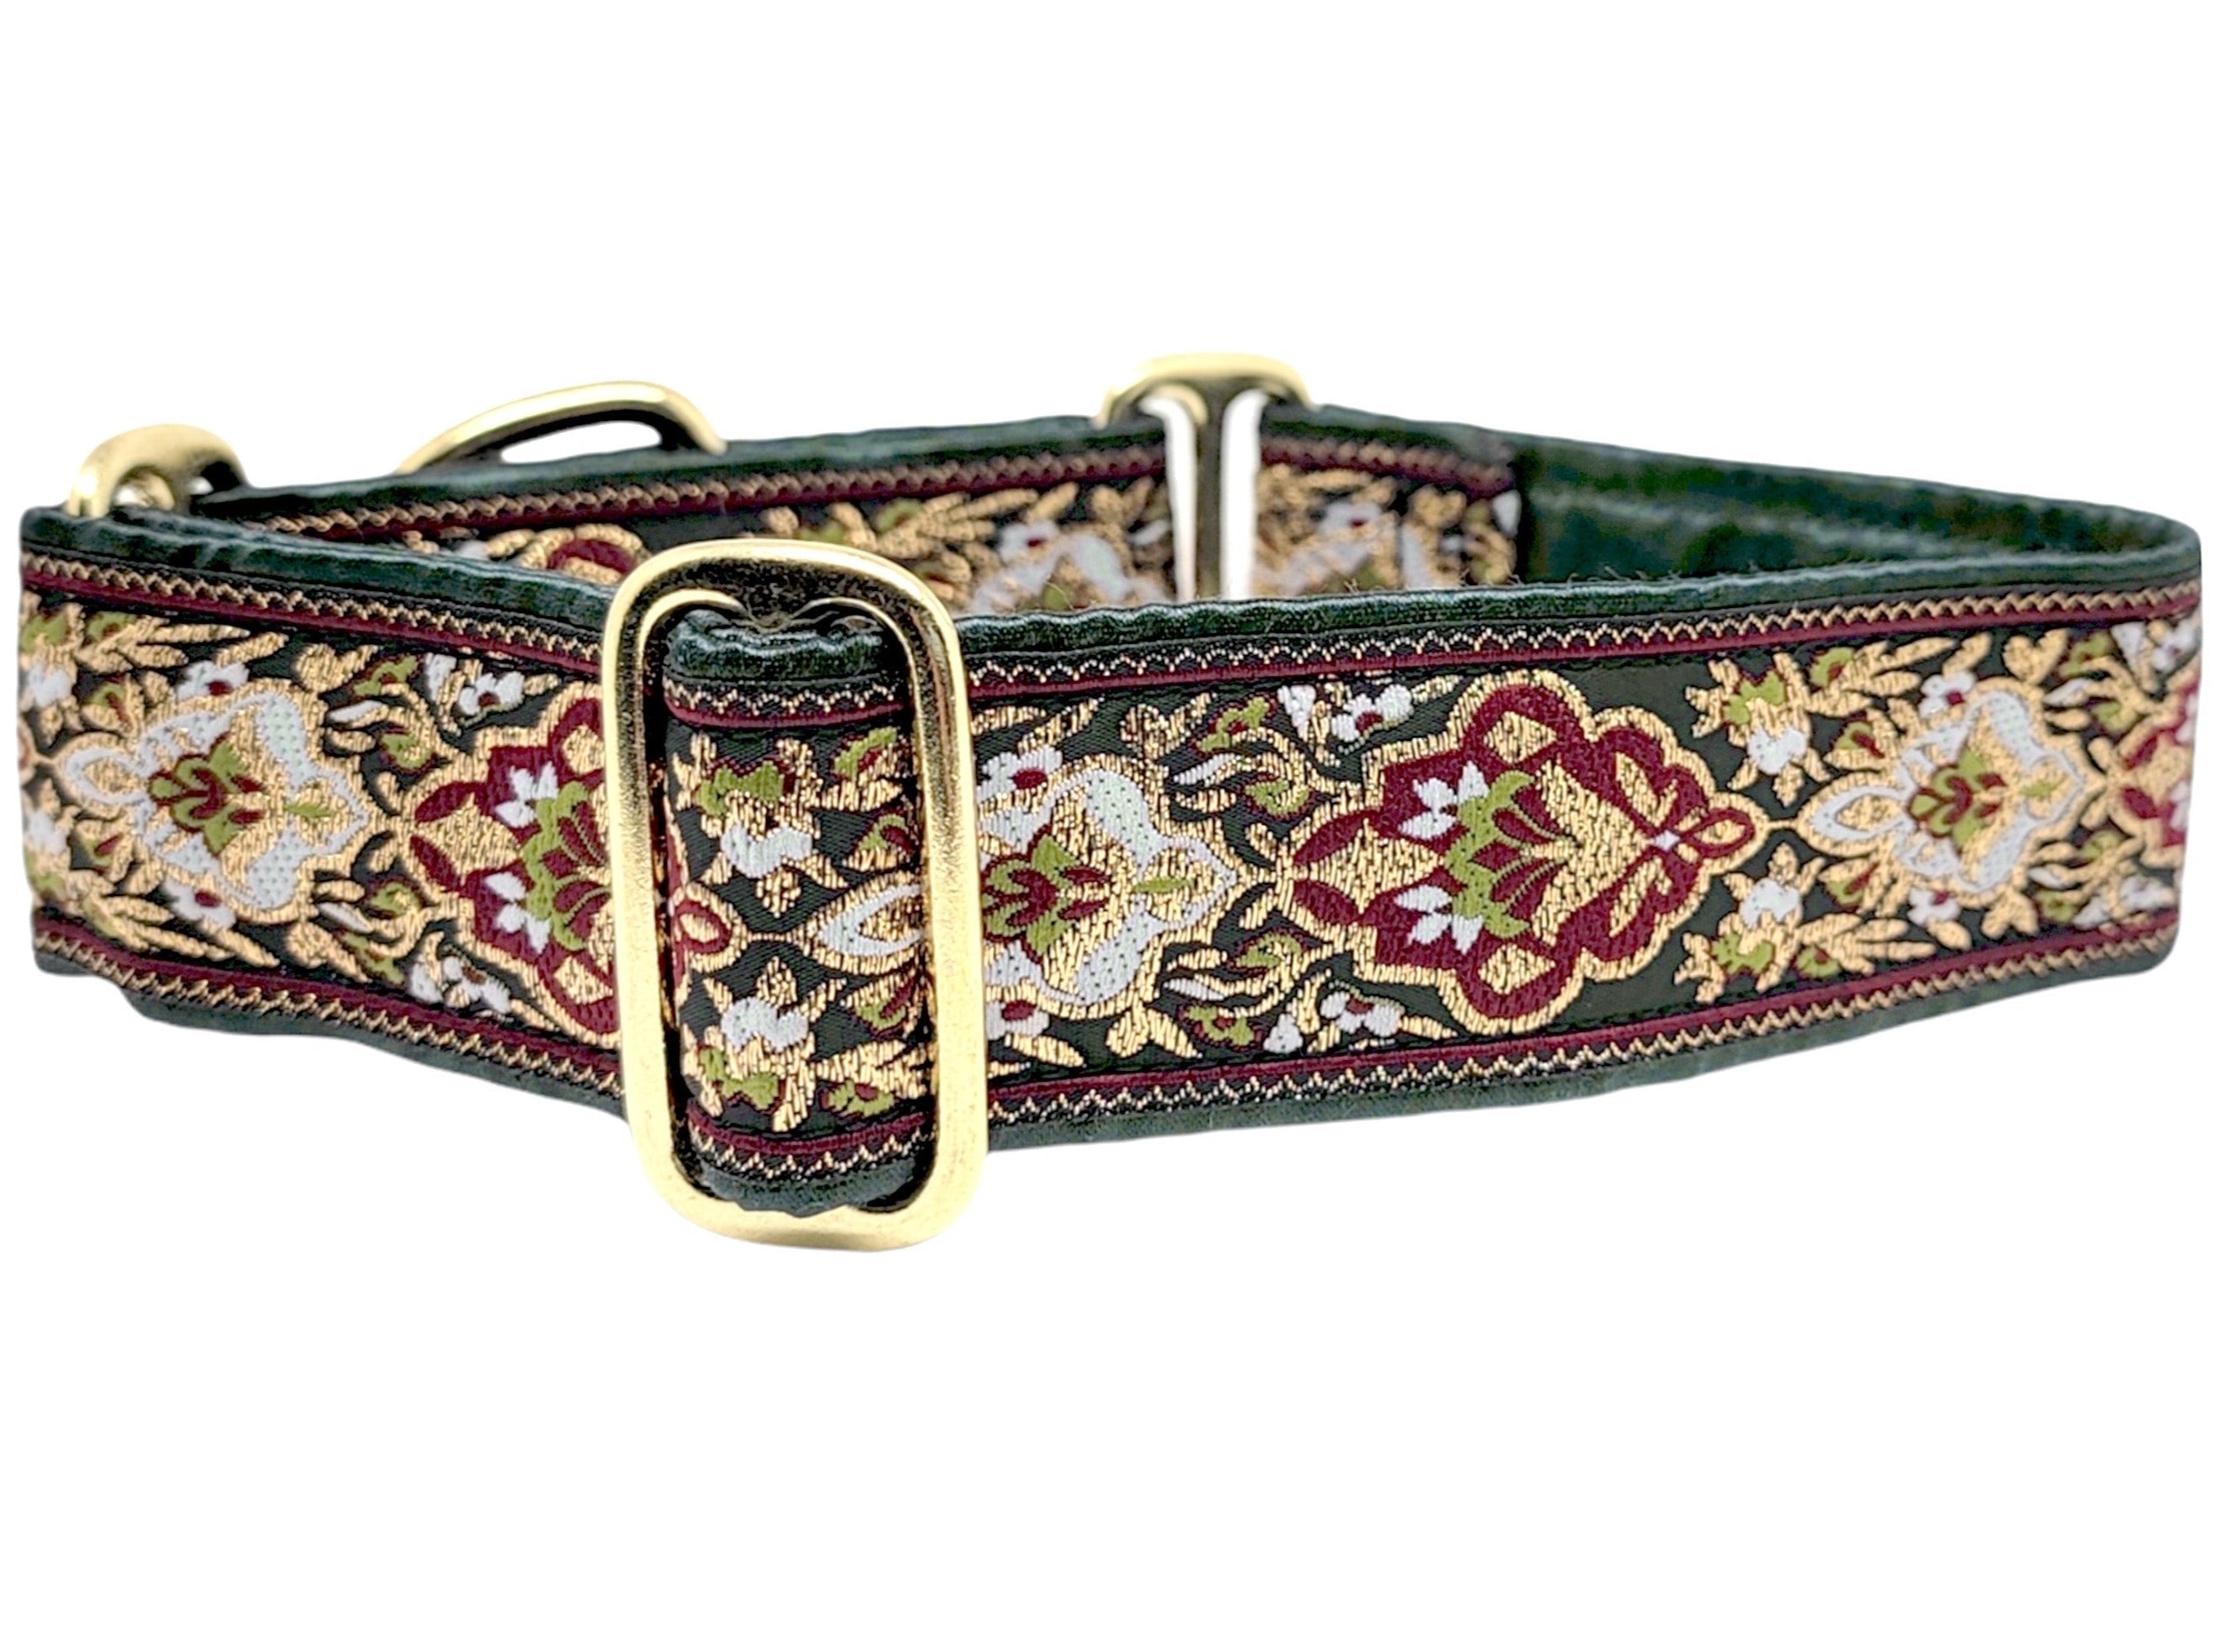 The Hound Haberdashery Collar Salzburg in Green & Gold - Martingale Dog Collar or Buckle Dog Collar - 1.5" Width